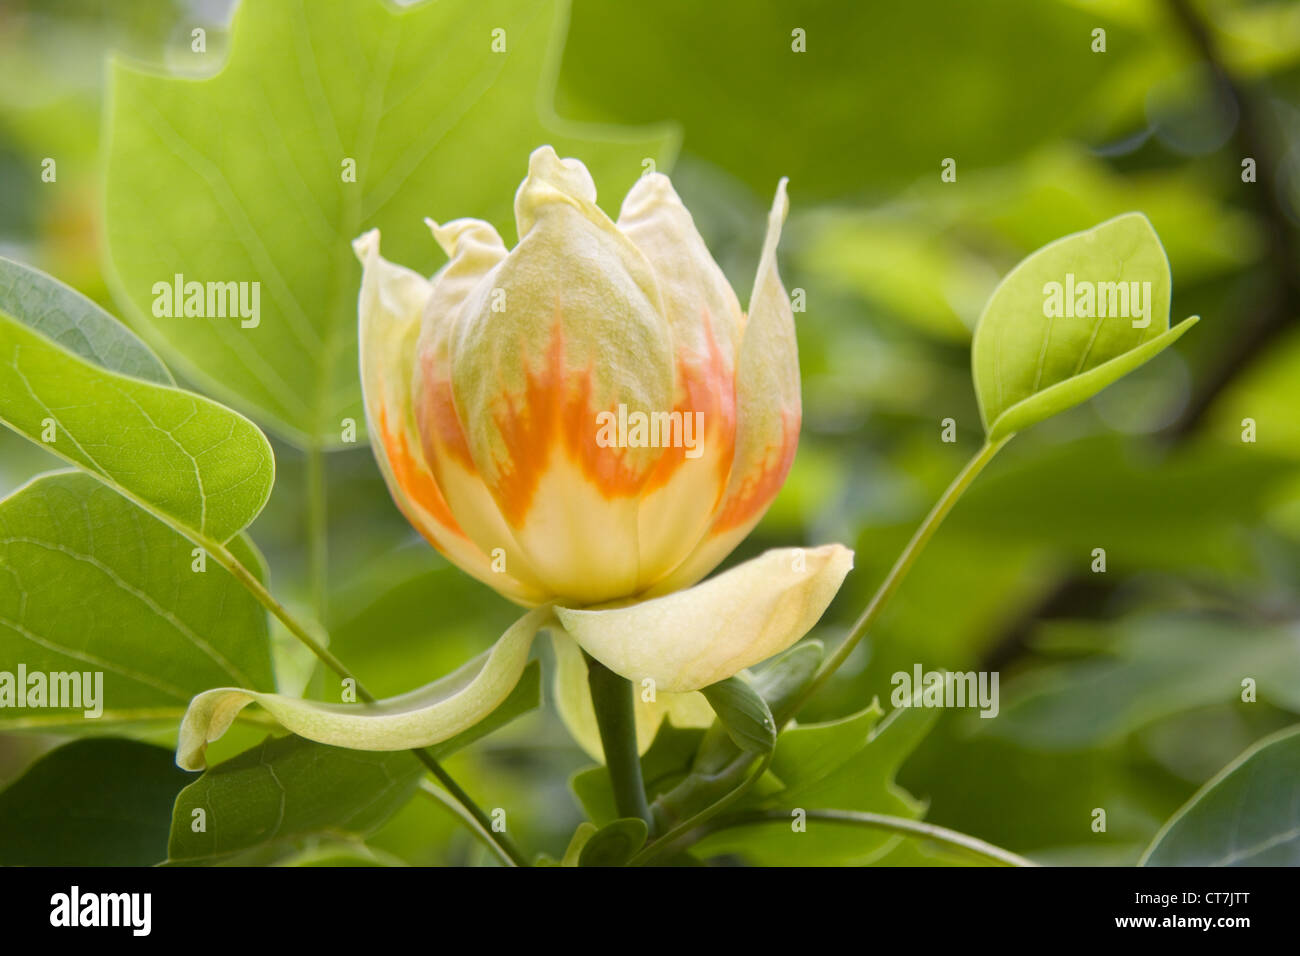 Liriodendron tulipifera Stock Photo